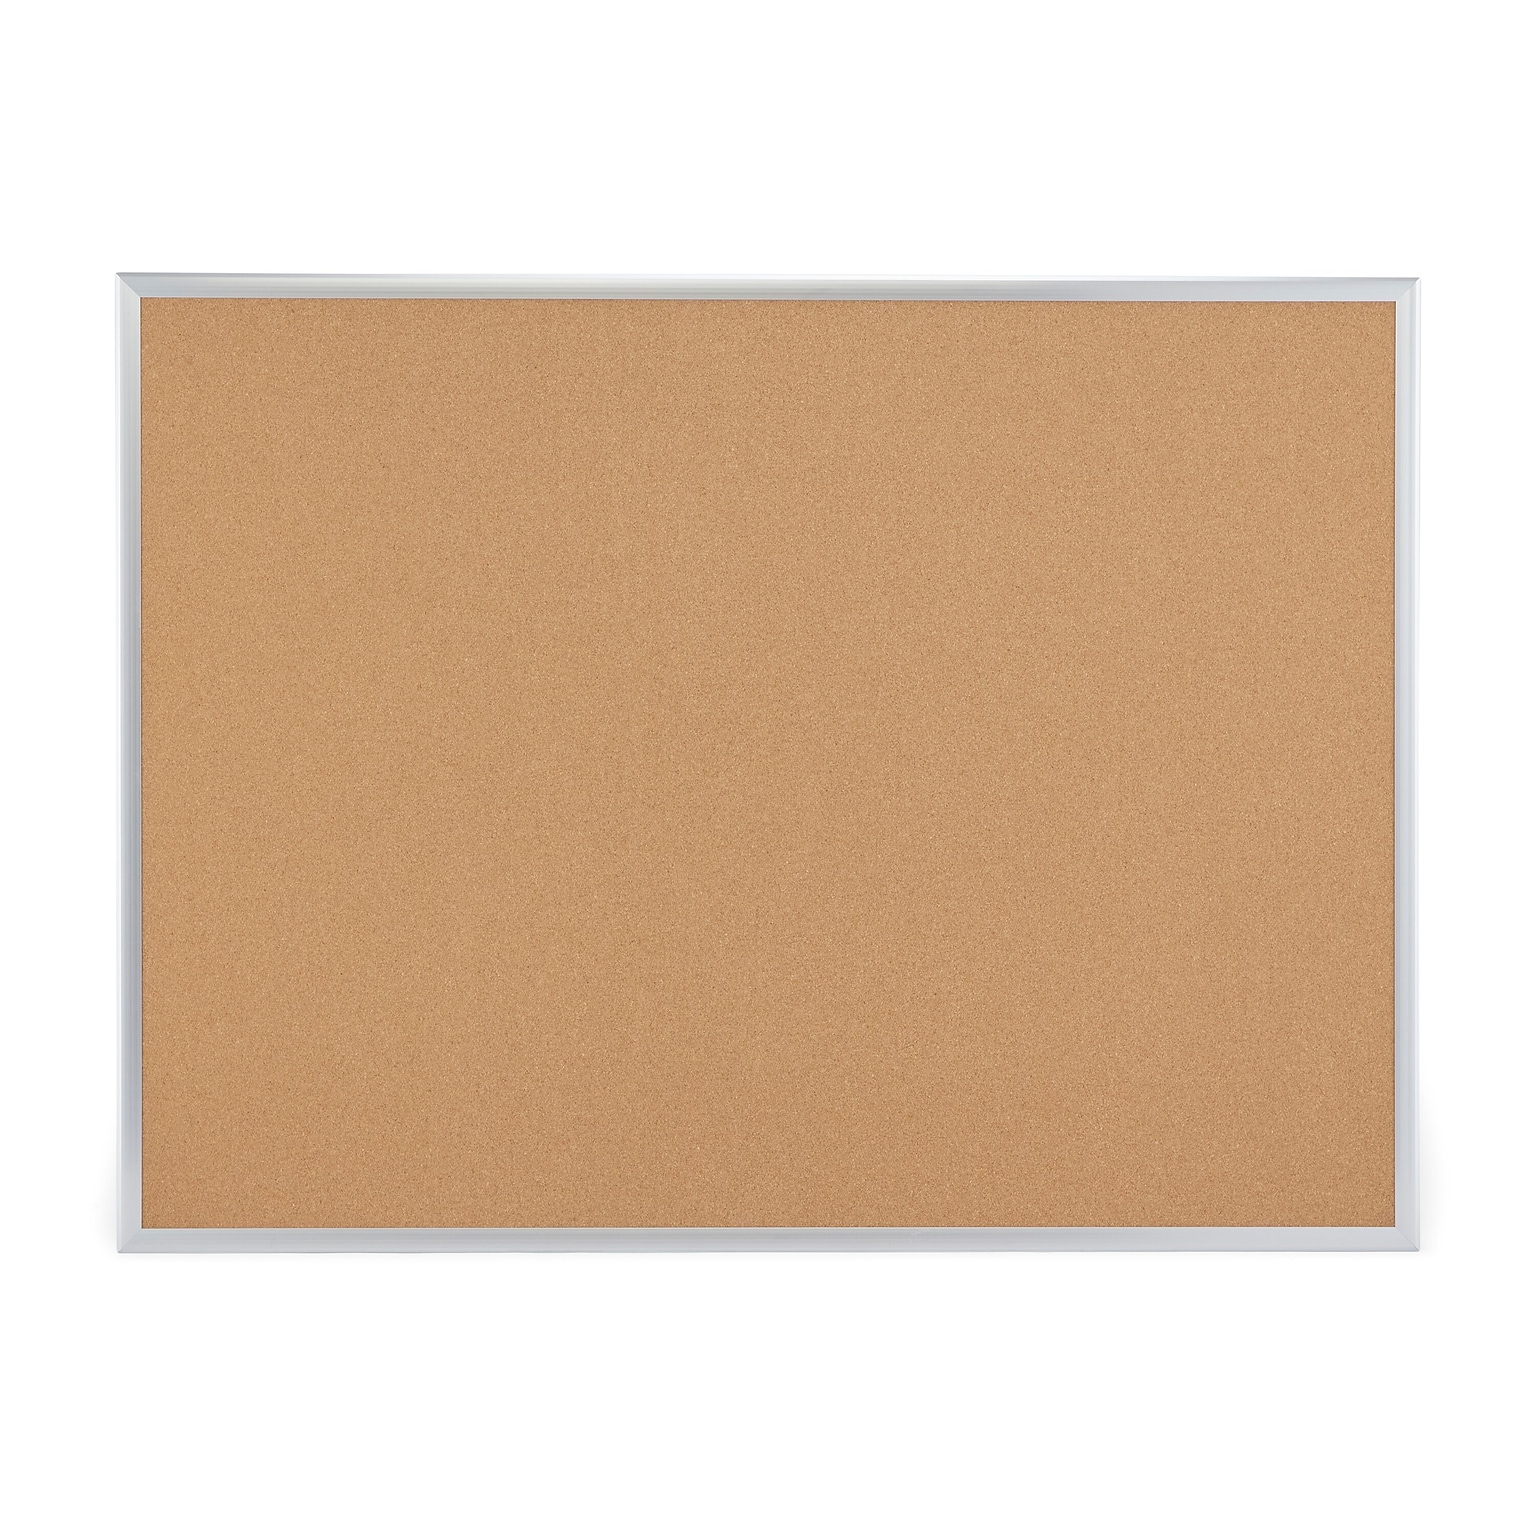 Quill Brand® Standard Durable Cork Bulletin Board, Aluminum Frame, 4W x 3H (28345-CC)